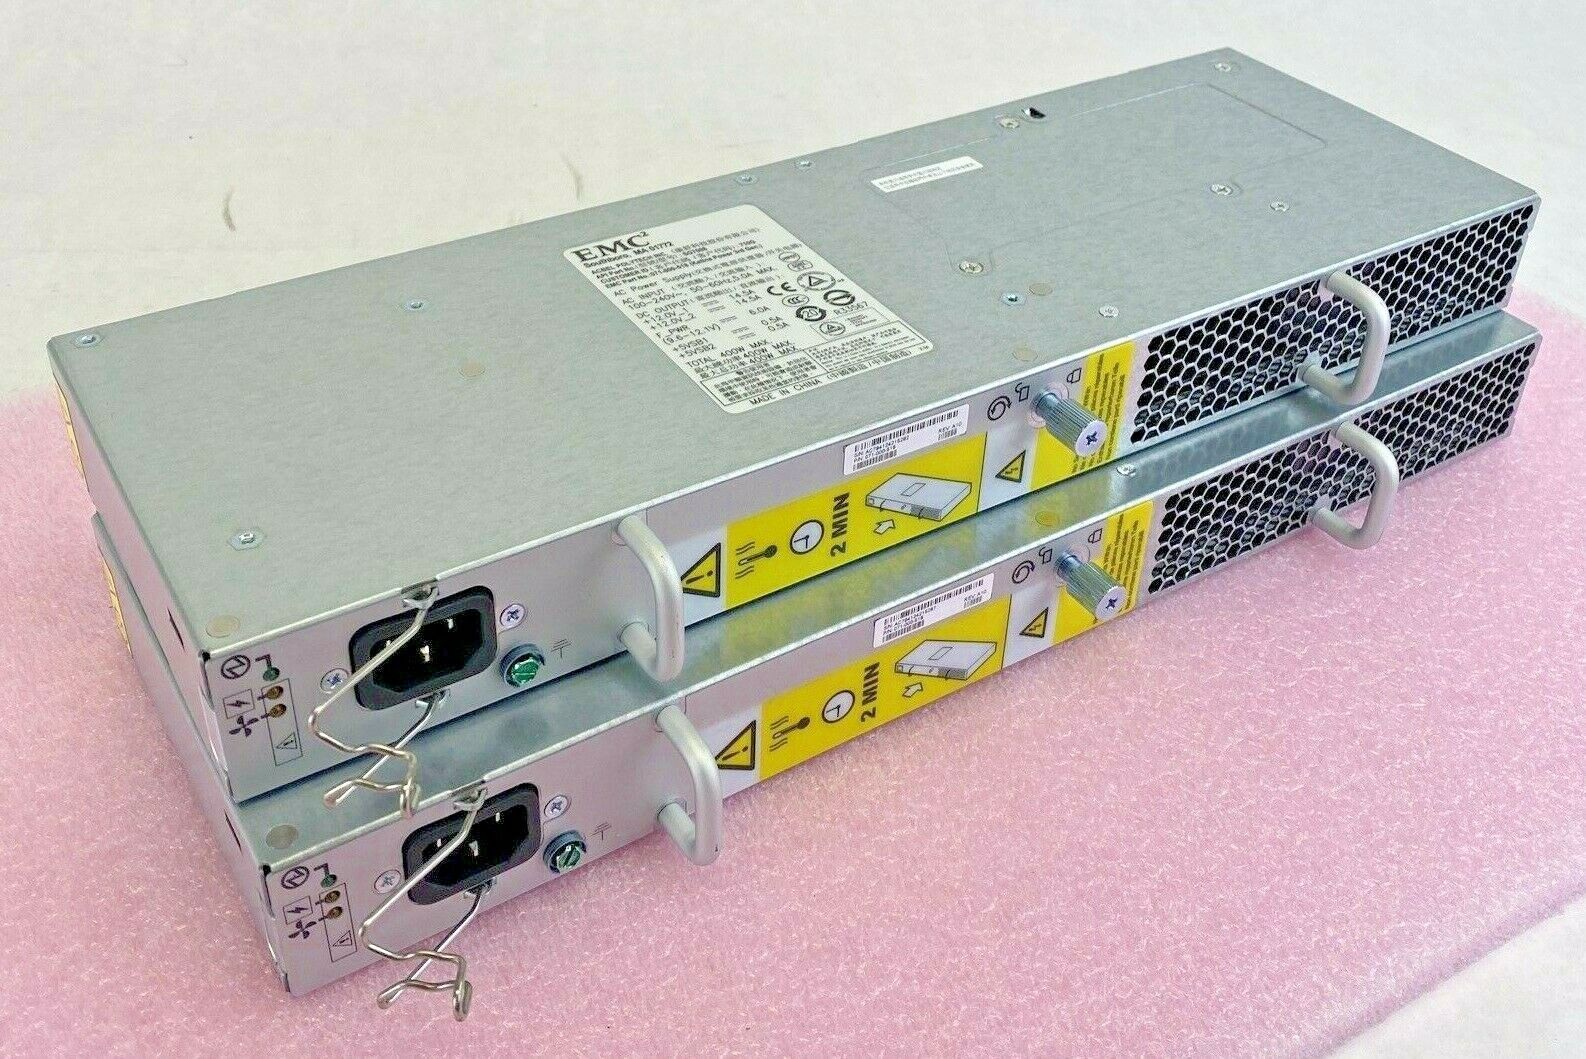 EMC 071-000-518 400W DAE Hot-Swap AC SG7008 server power supply Lot of 2